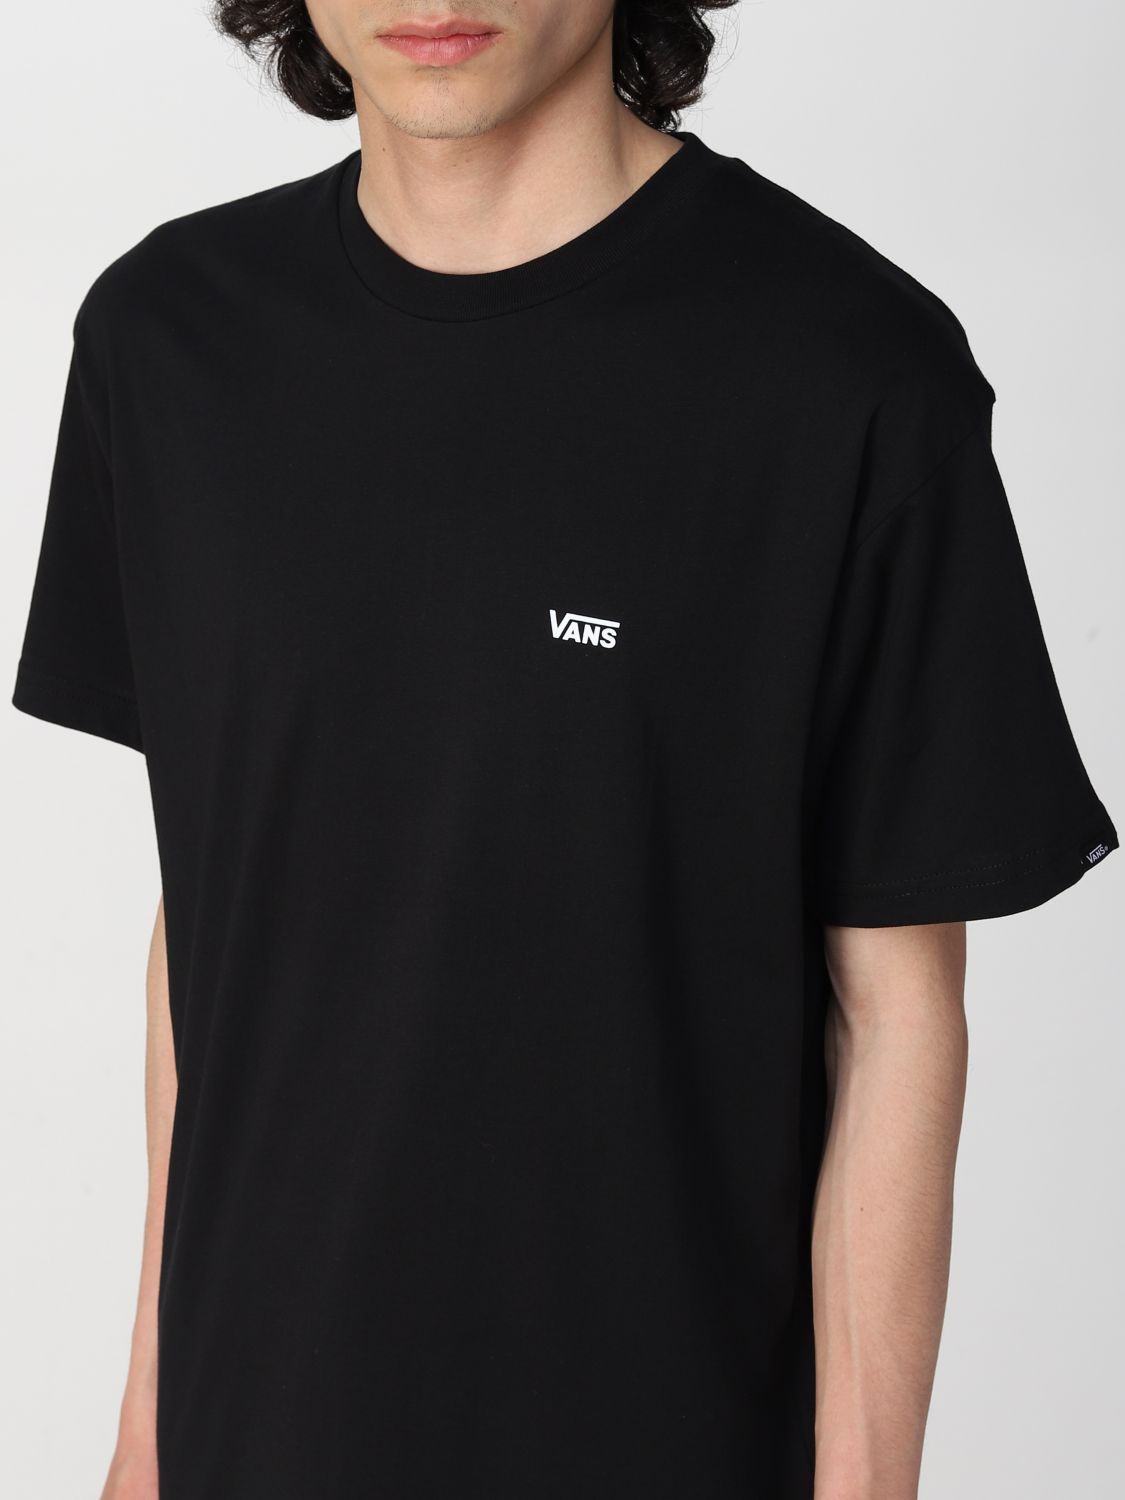 Vans Tシャツ メンズ ブラック Giglio Comオンラインのvans Tシャツ Vn0a3cze